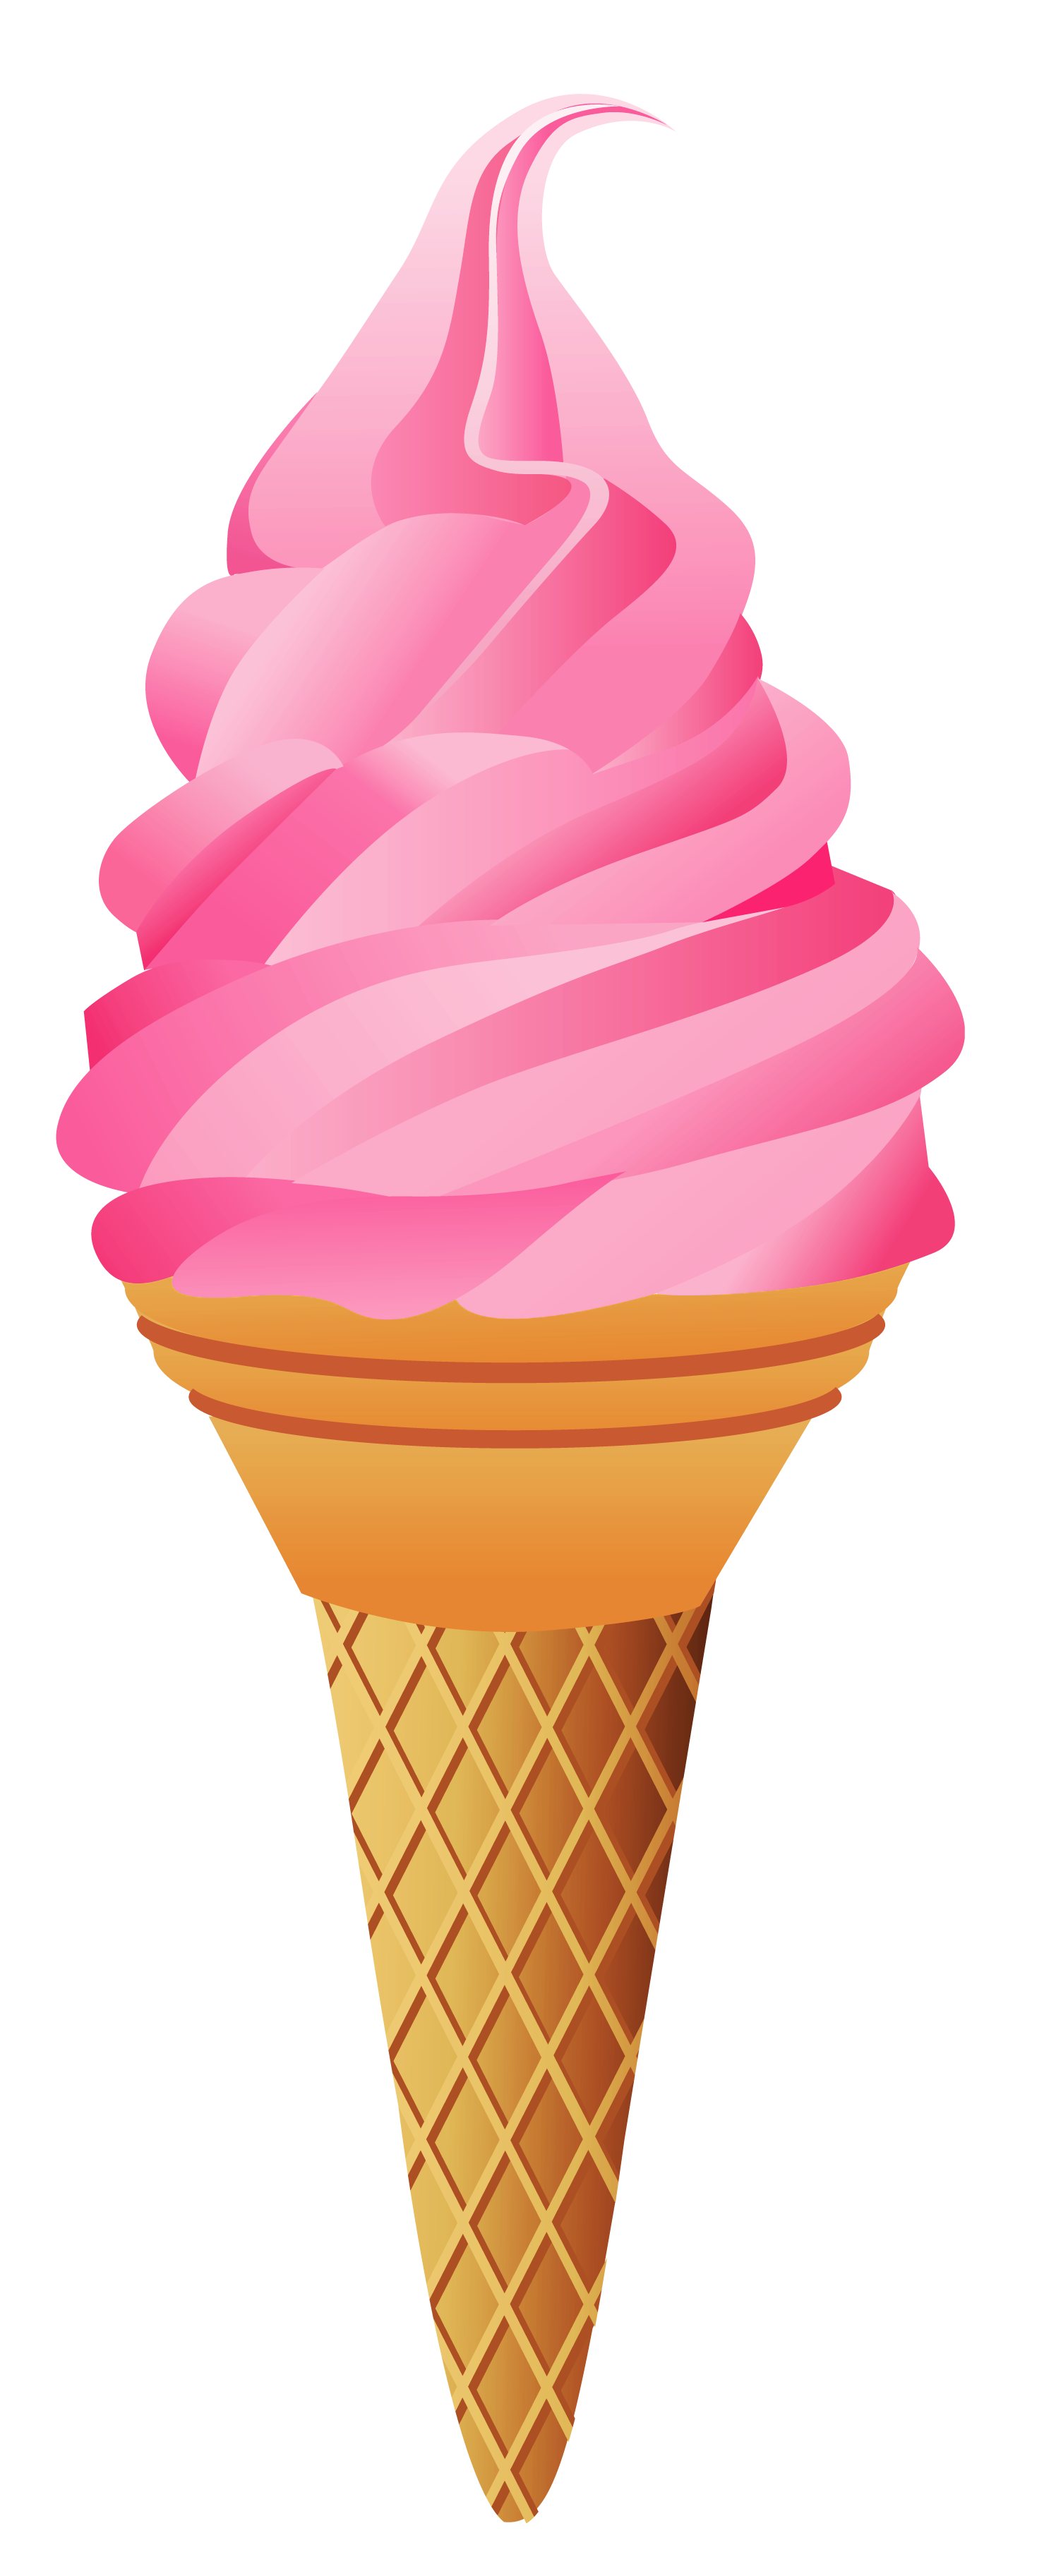 clipart of ice cream cone - photo #26